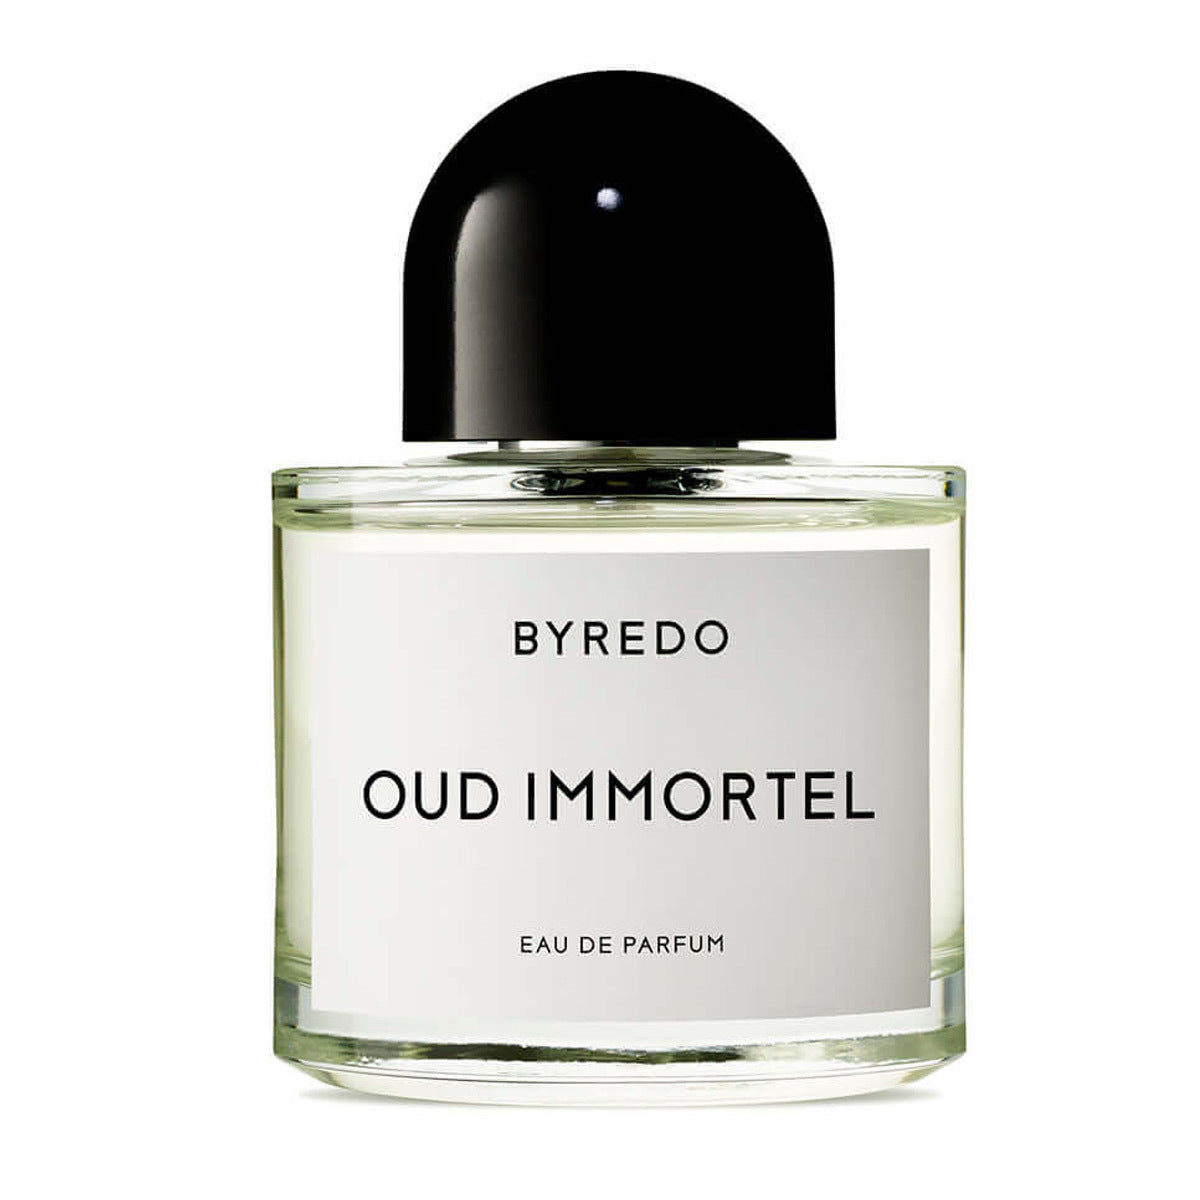 Primary image of Oud Immortel Eau de Parfum